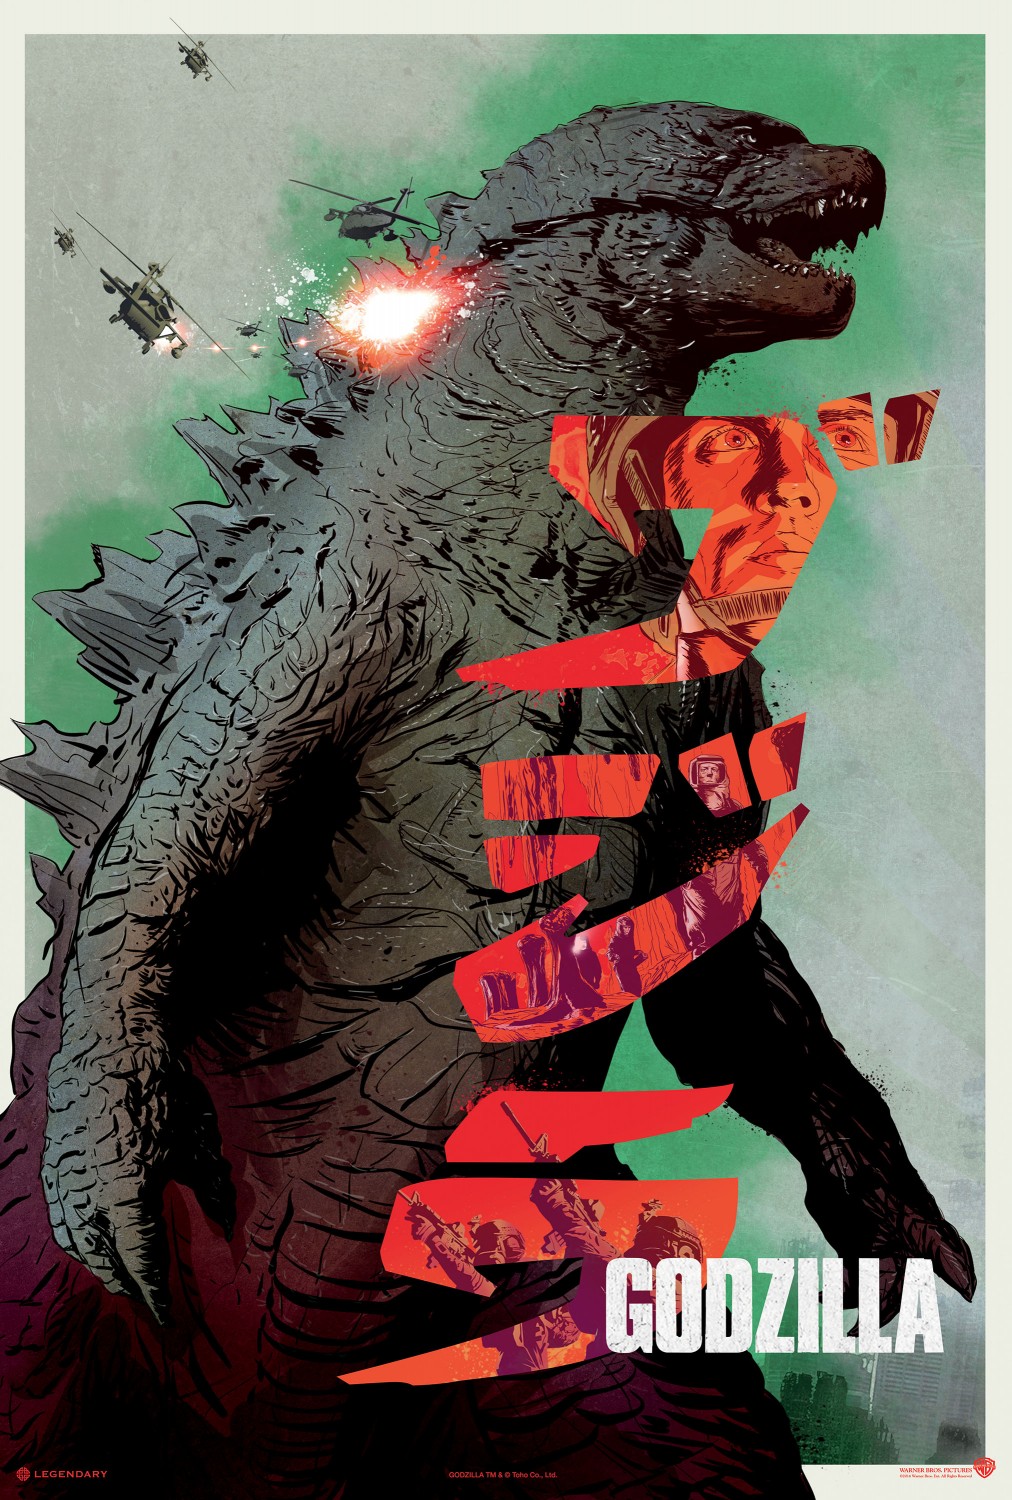 Extra Large Movie Poster Image for Godzilla (#15 of 22)